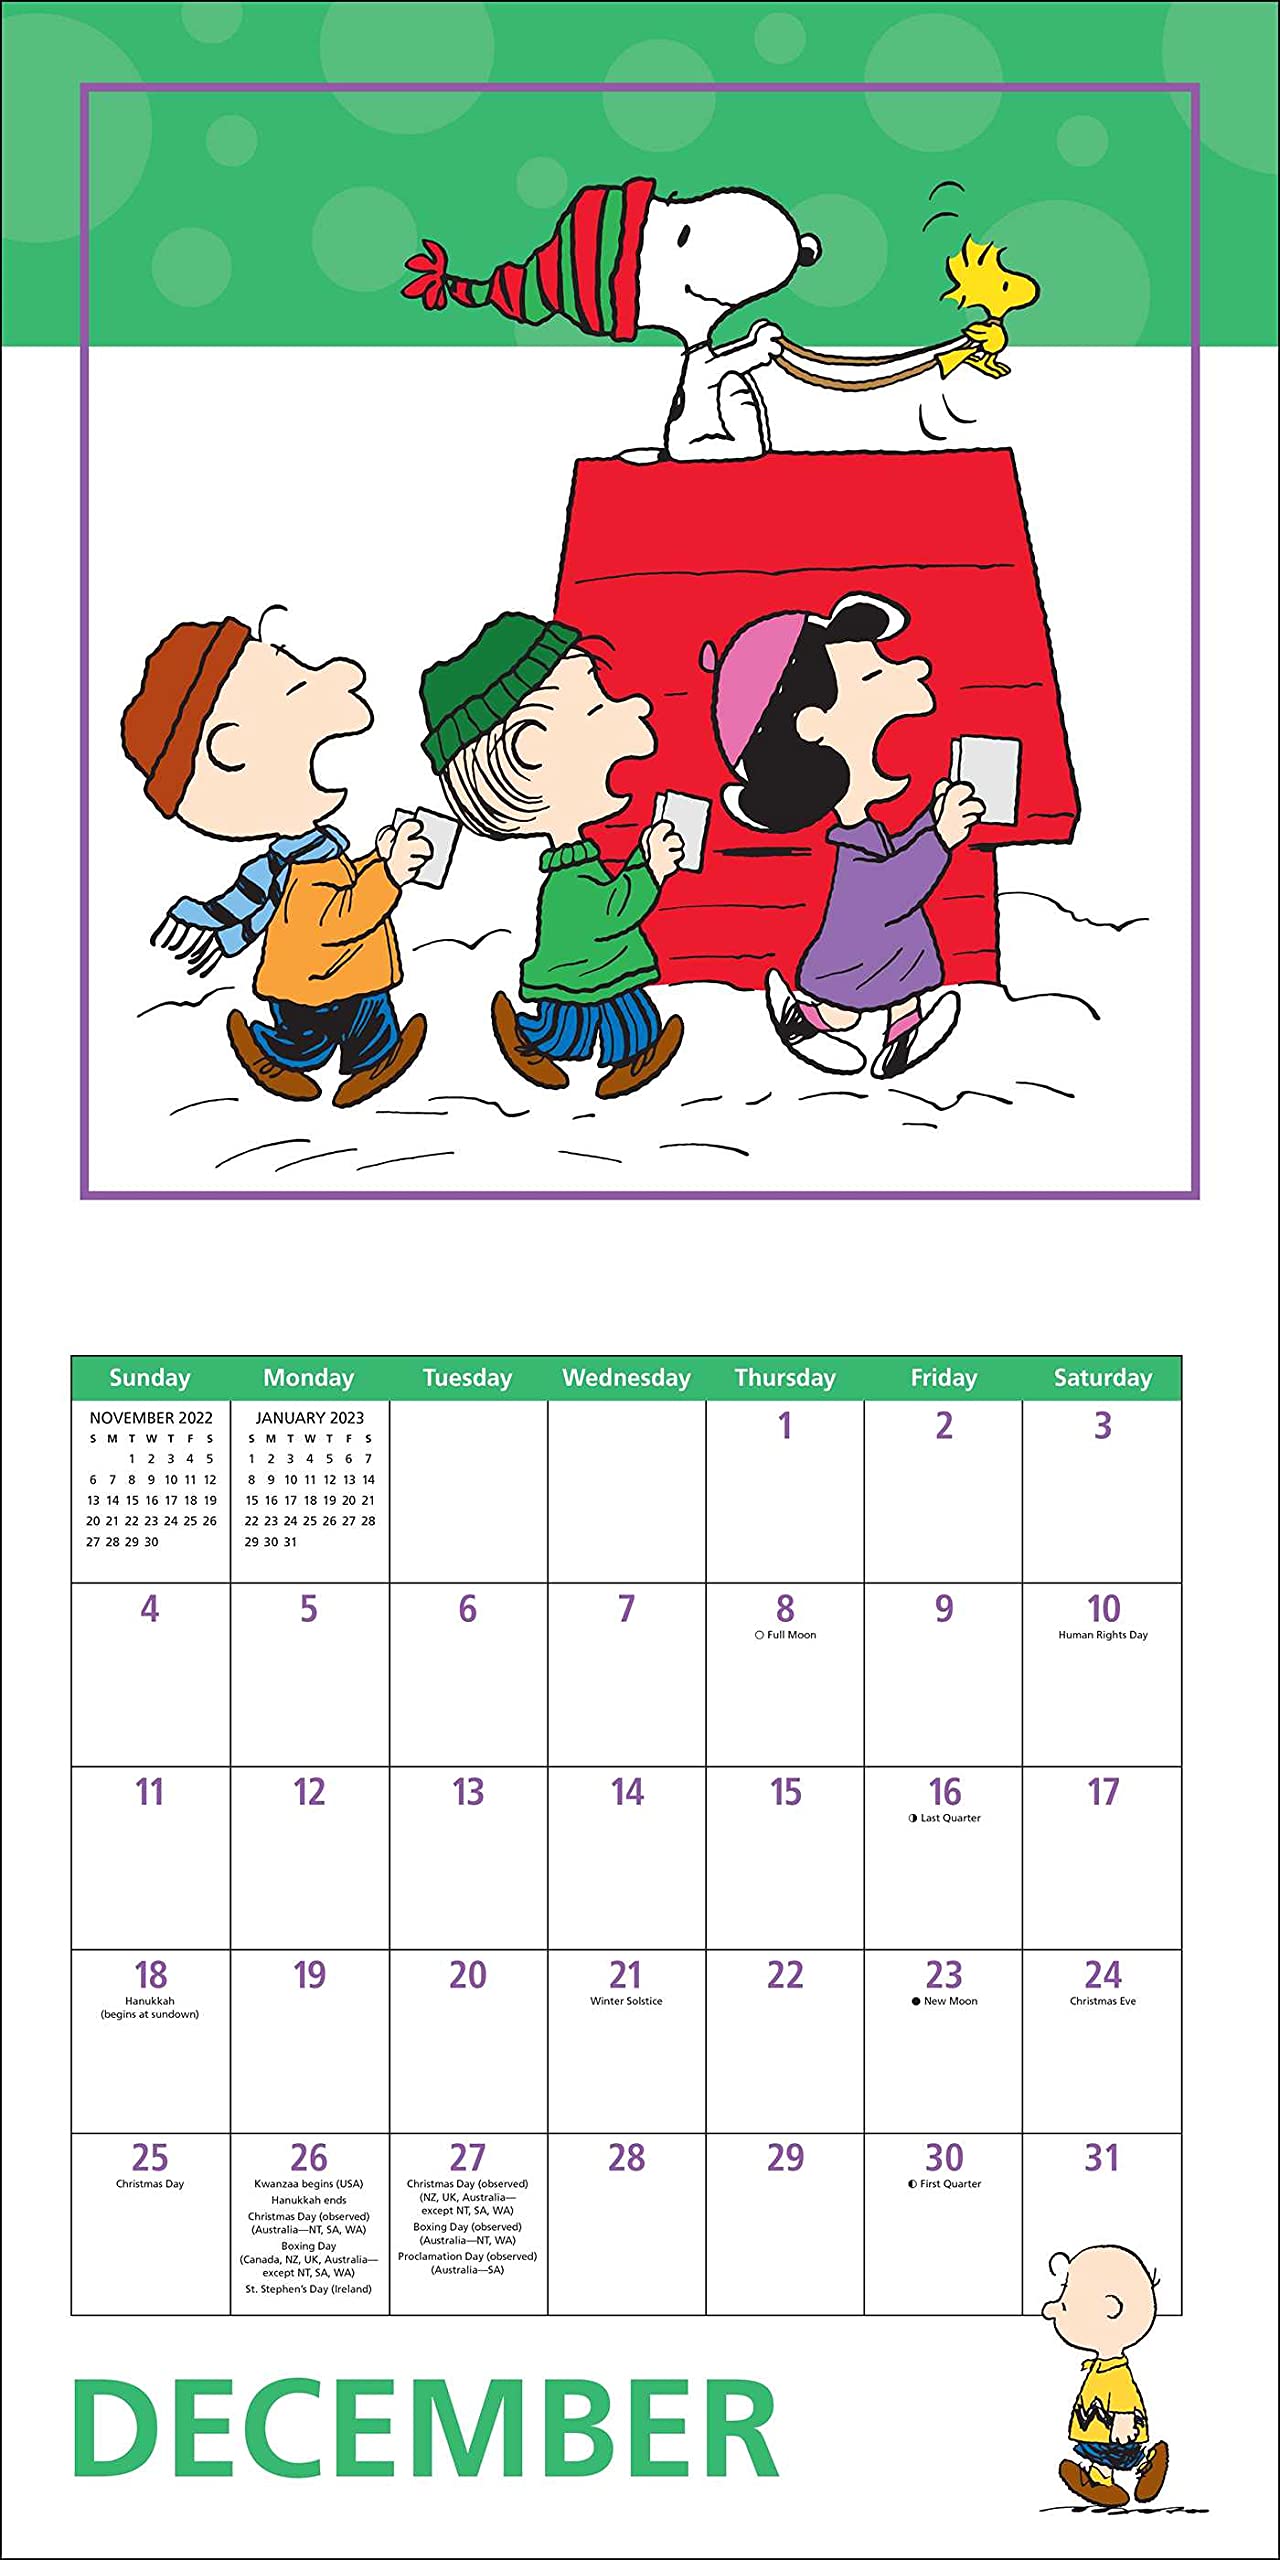 Peanuts 2022 Wall Calendar